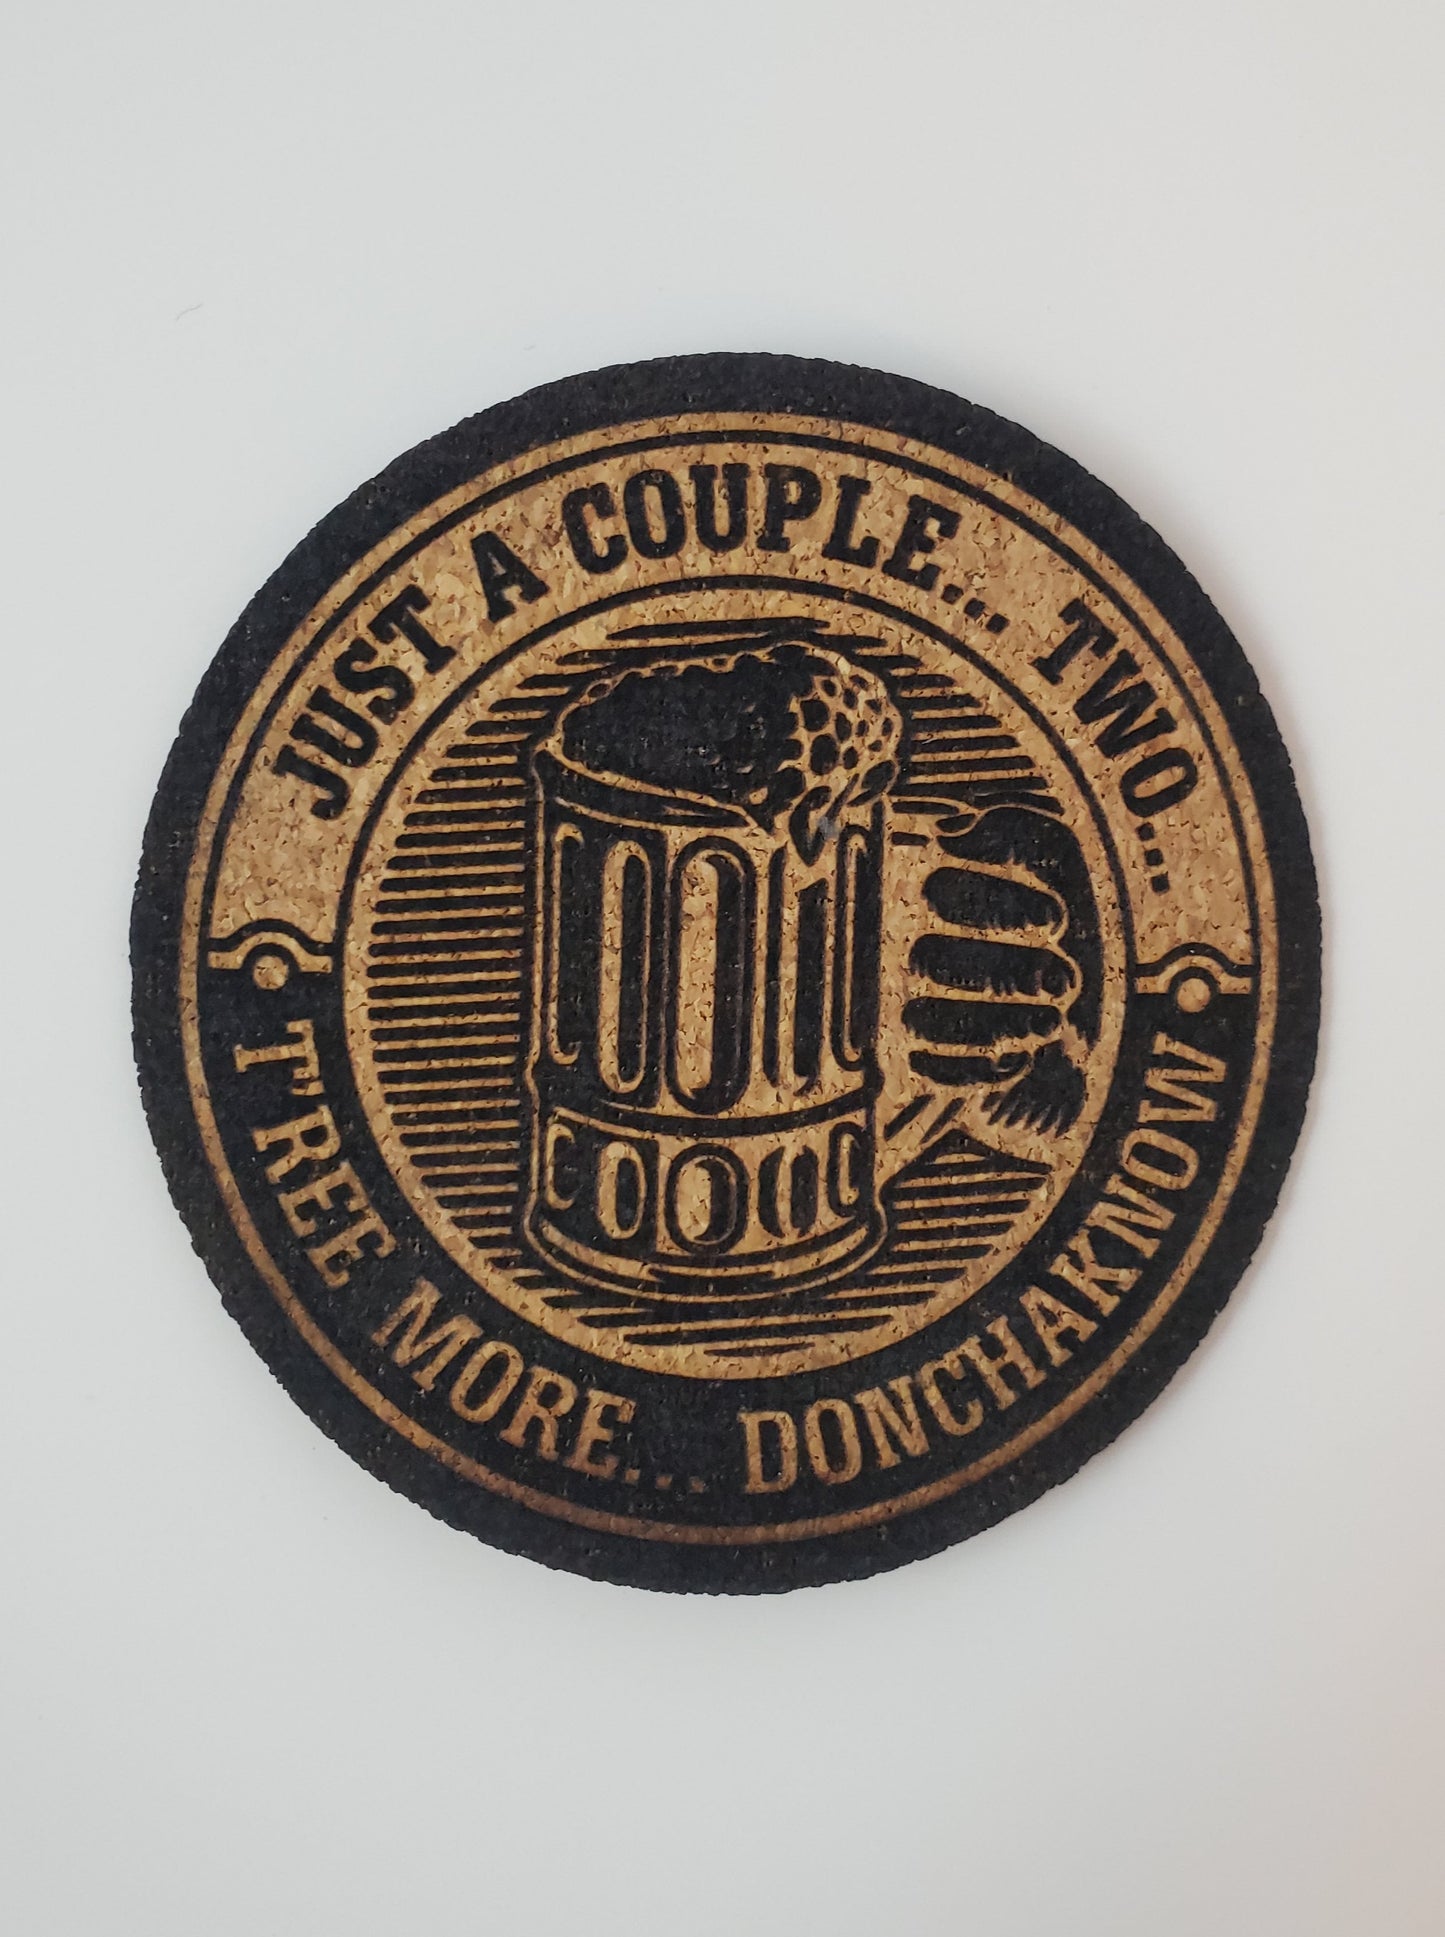 "Couple, Two, T'ree" Drinkin' Design Trucker Hat (White Mesh/ Black Fabric)